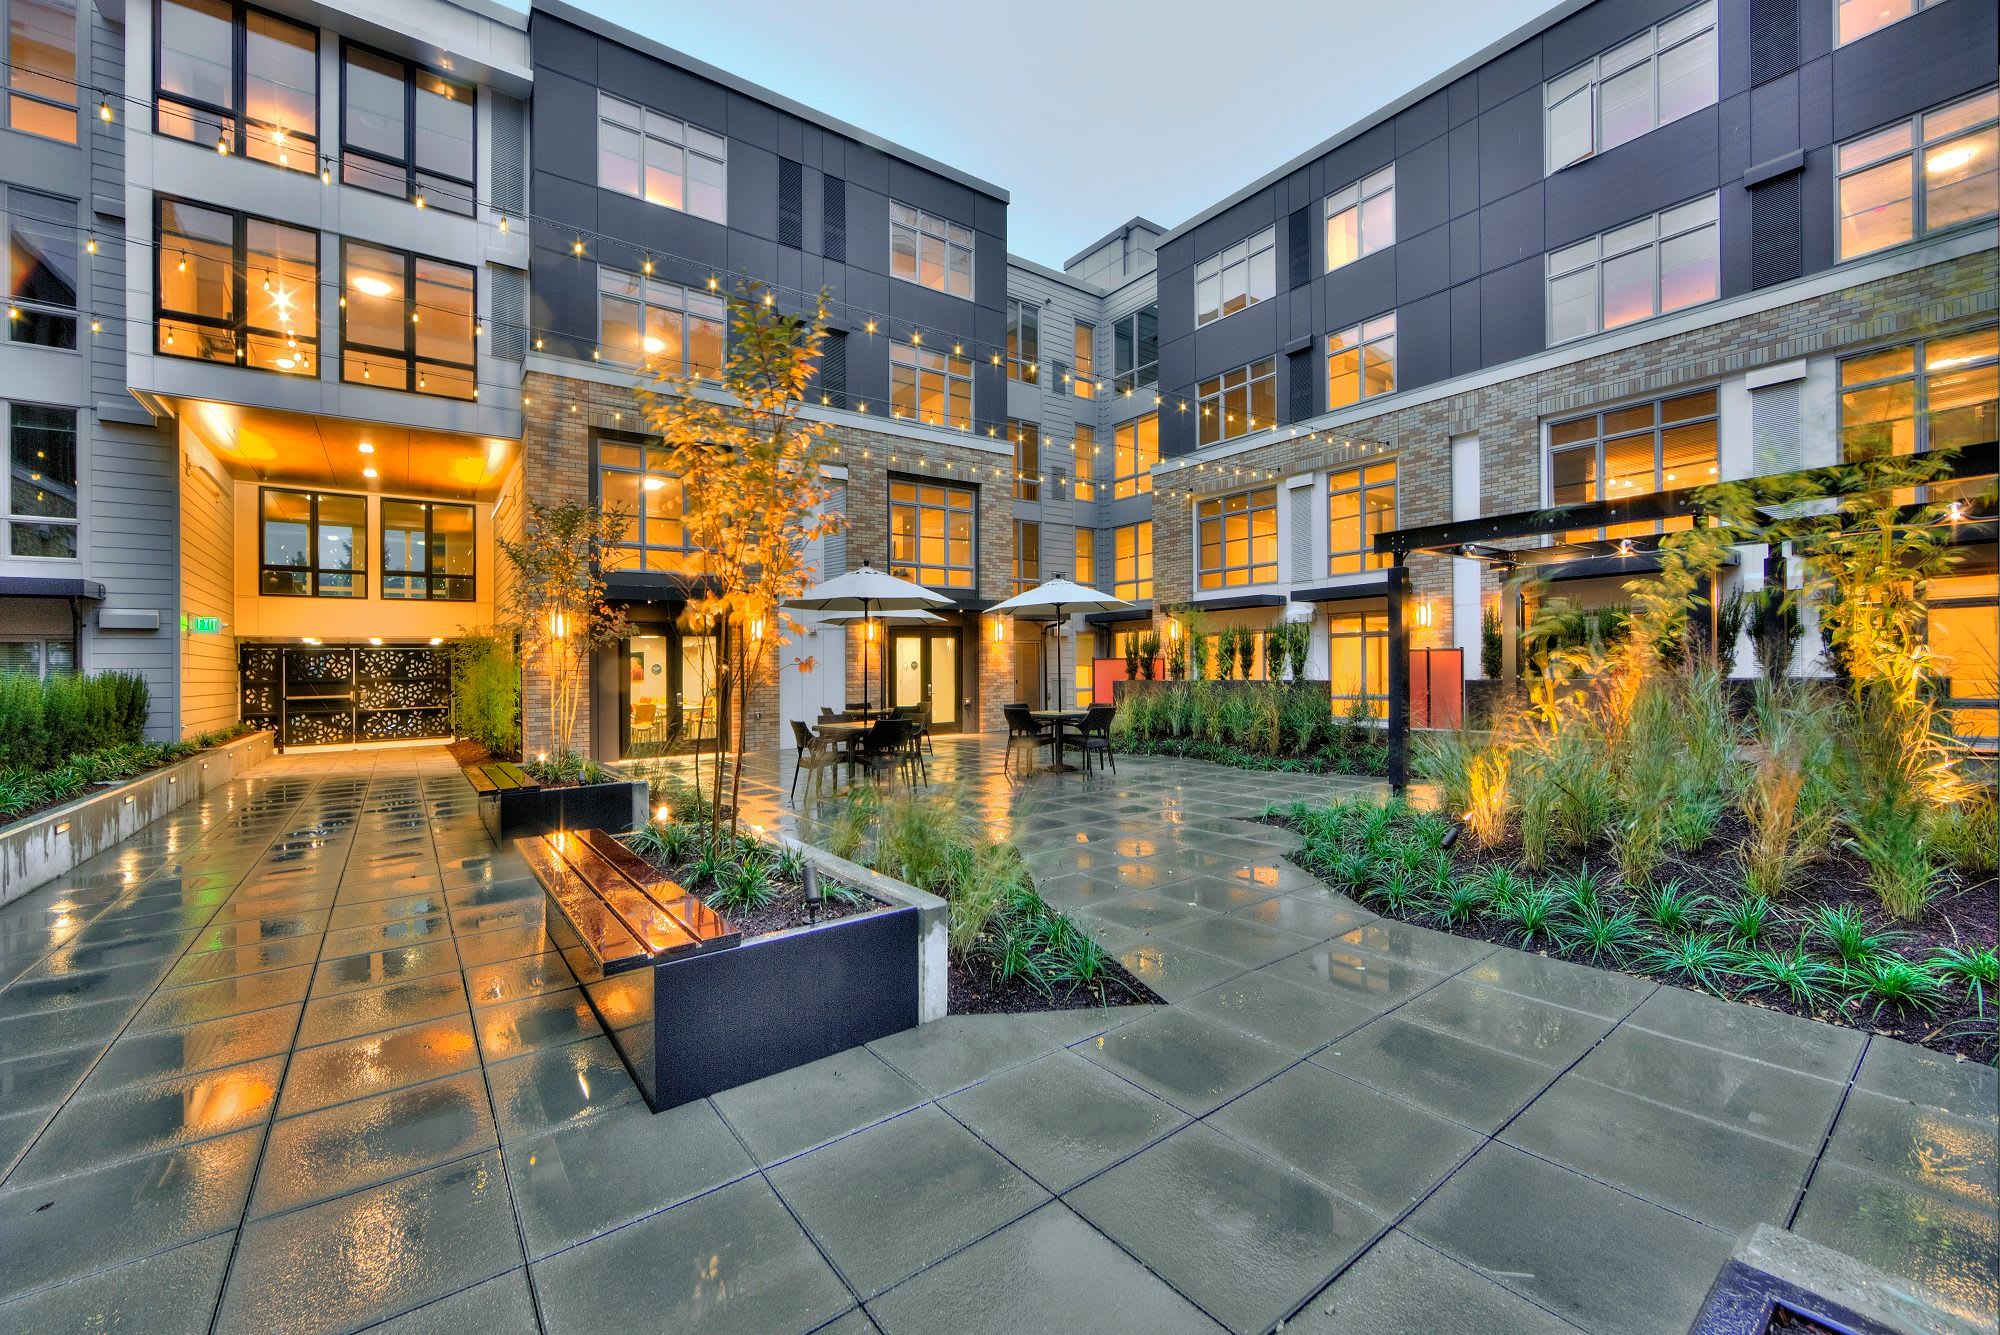 Courtyard patio of The Lyric in Seattle, Washington